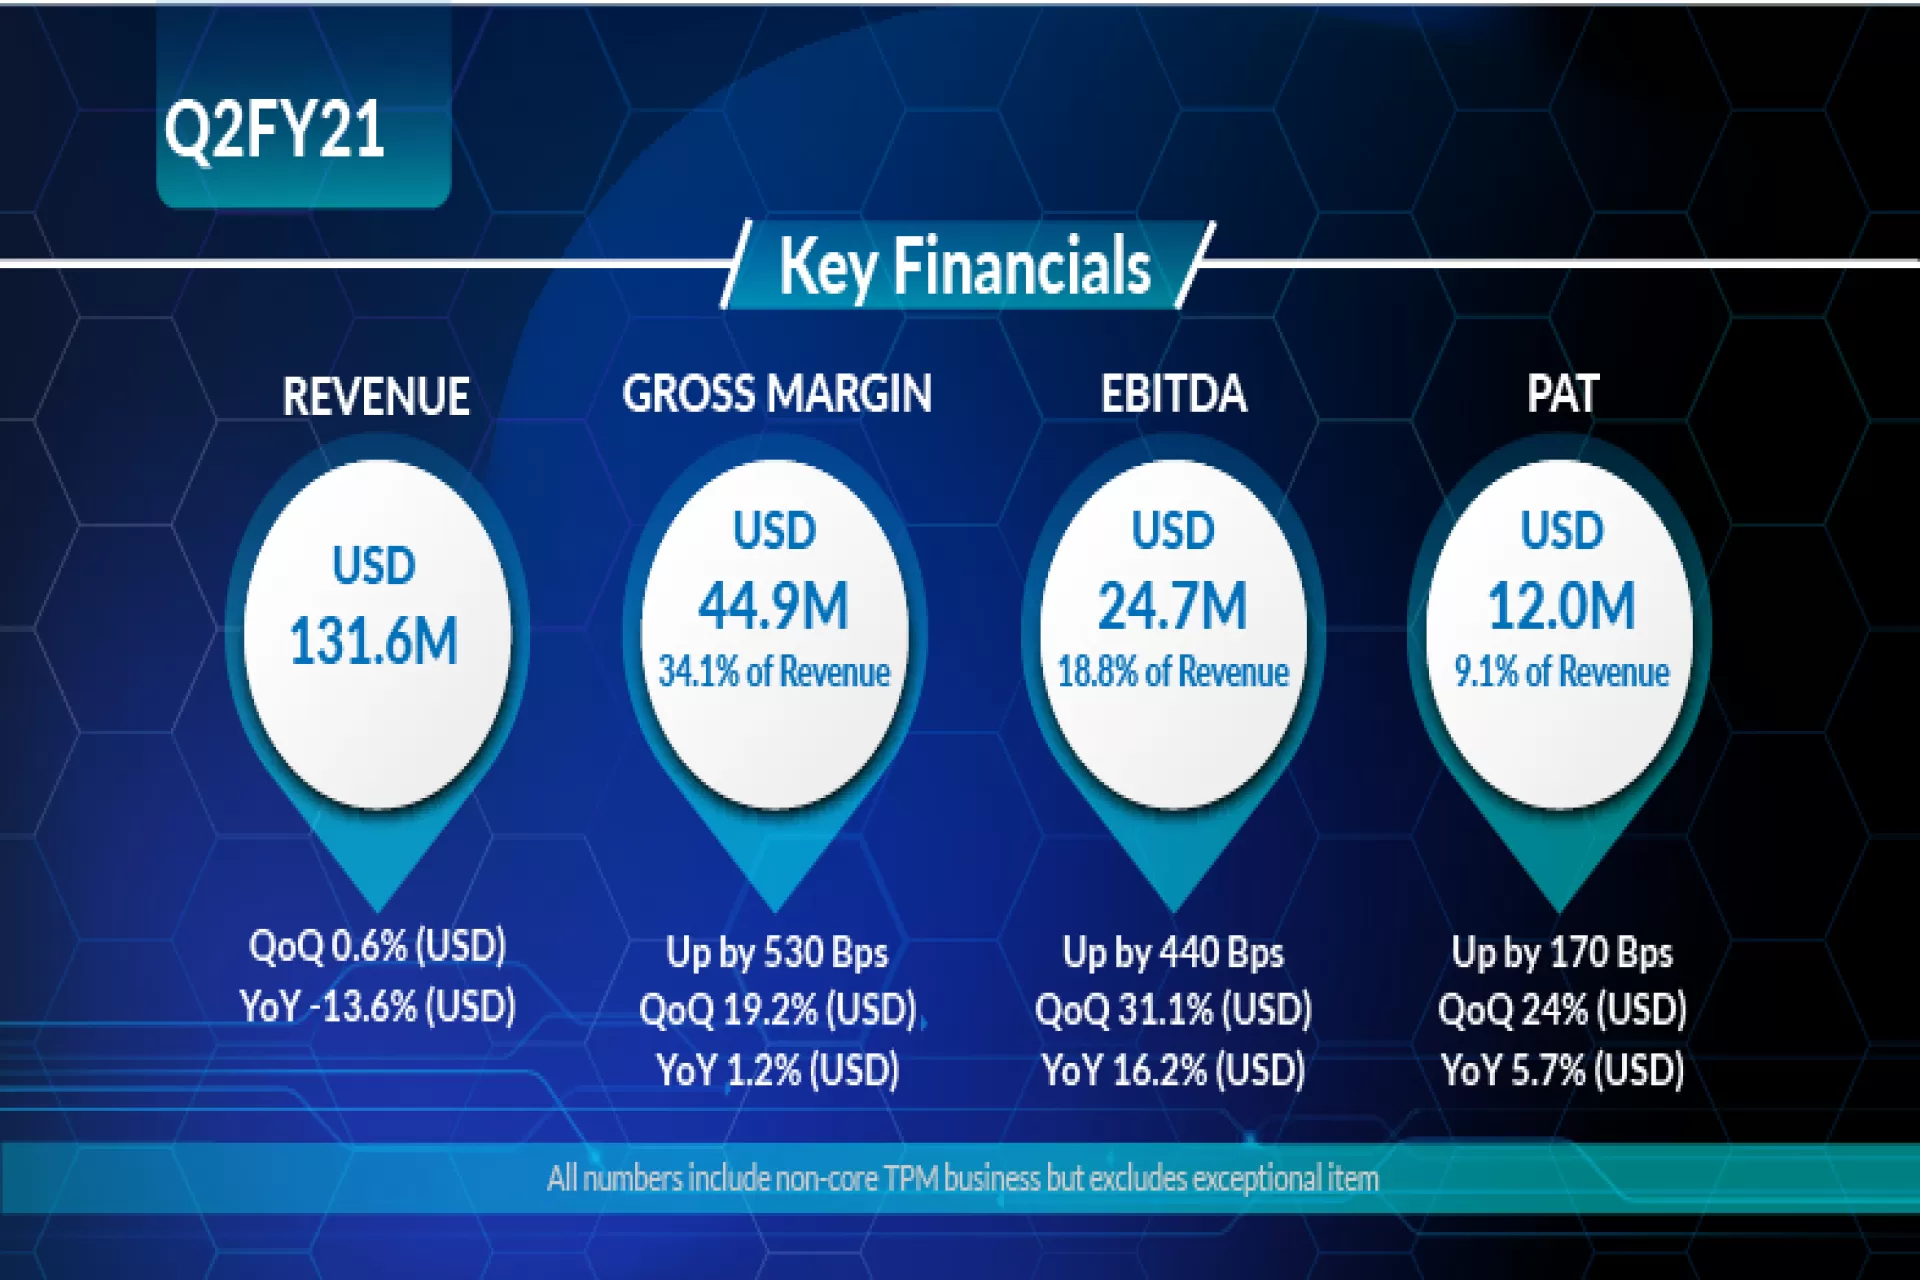 Zensar reports strong margins, Revenue grew by 0.6% QoQ